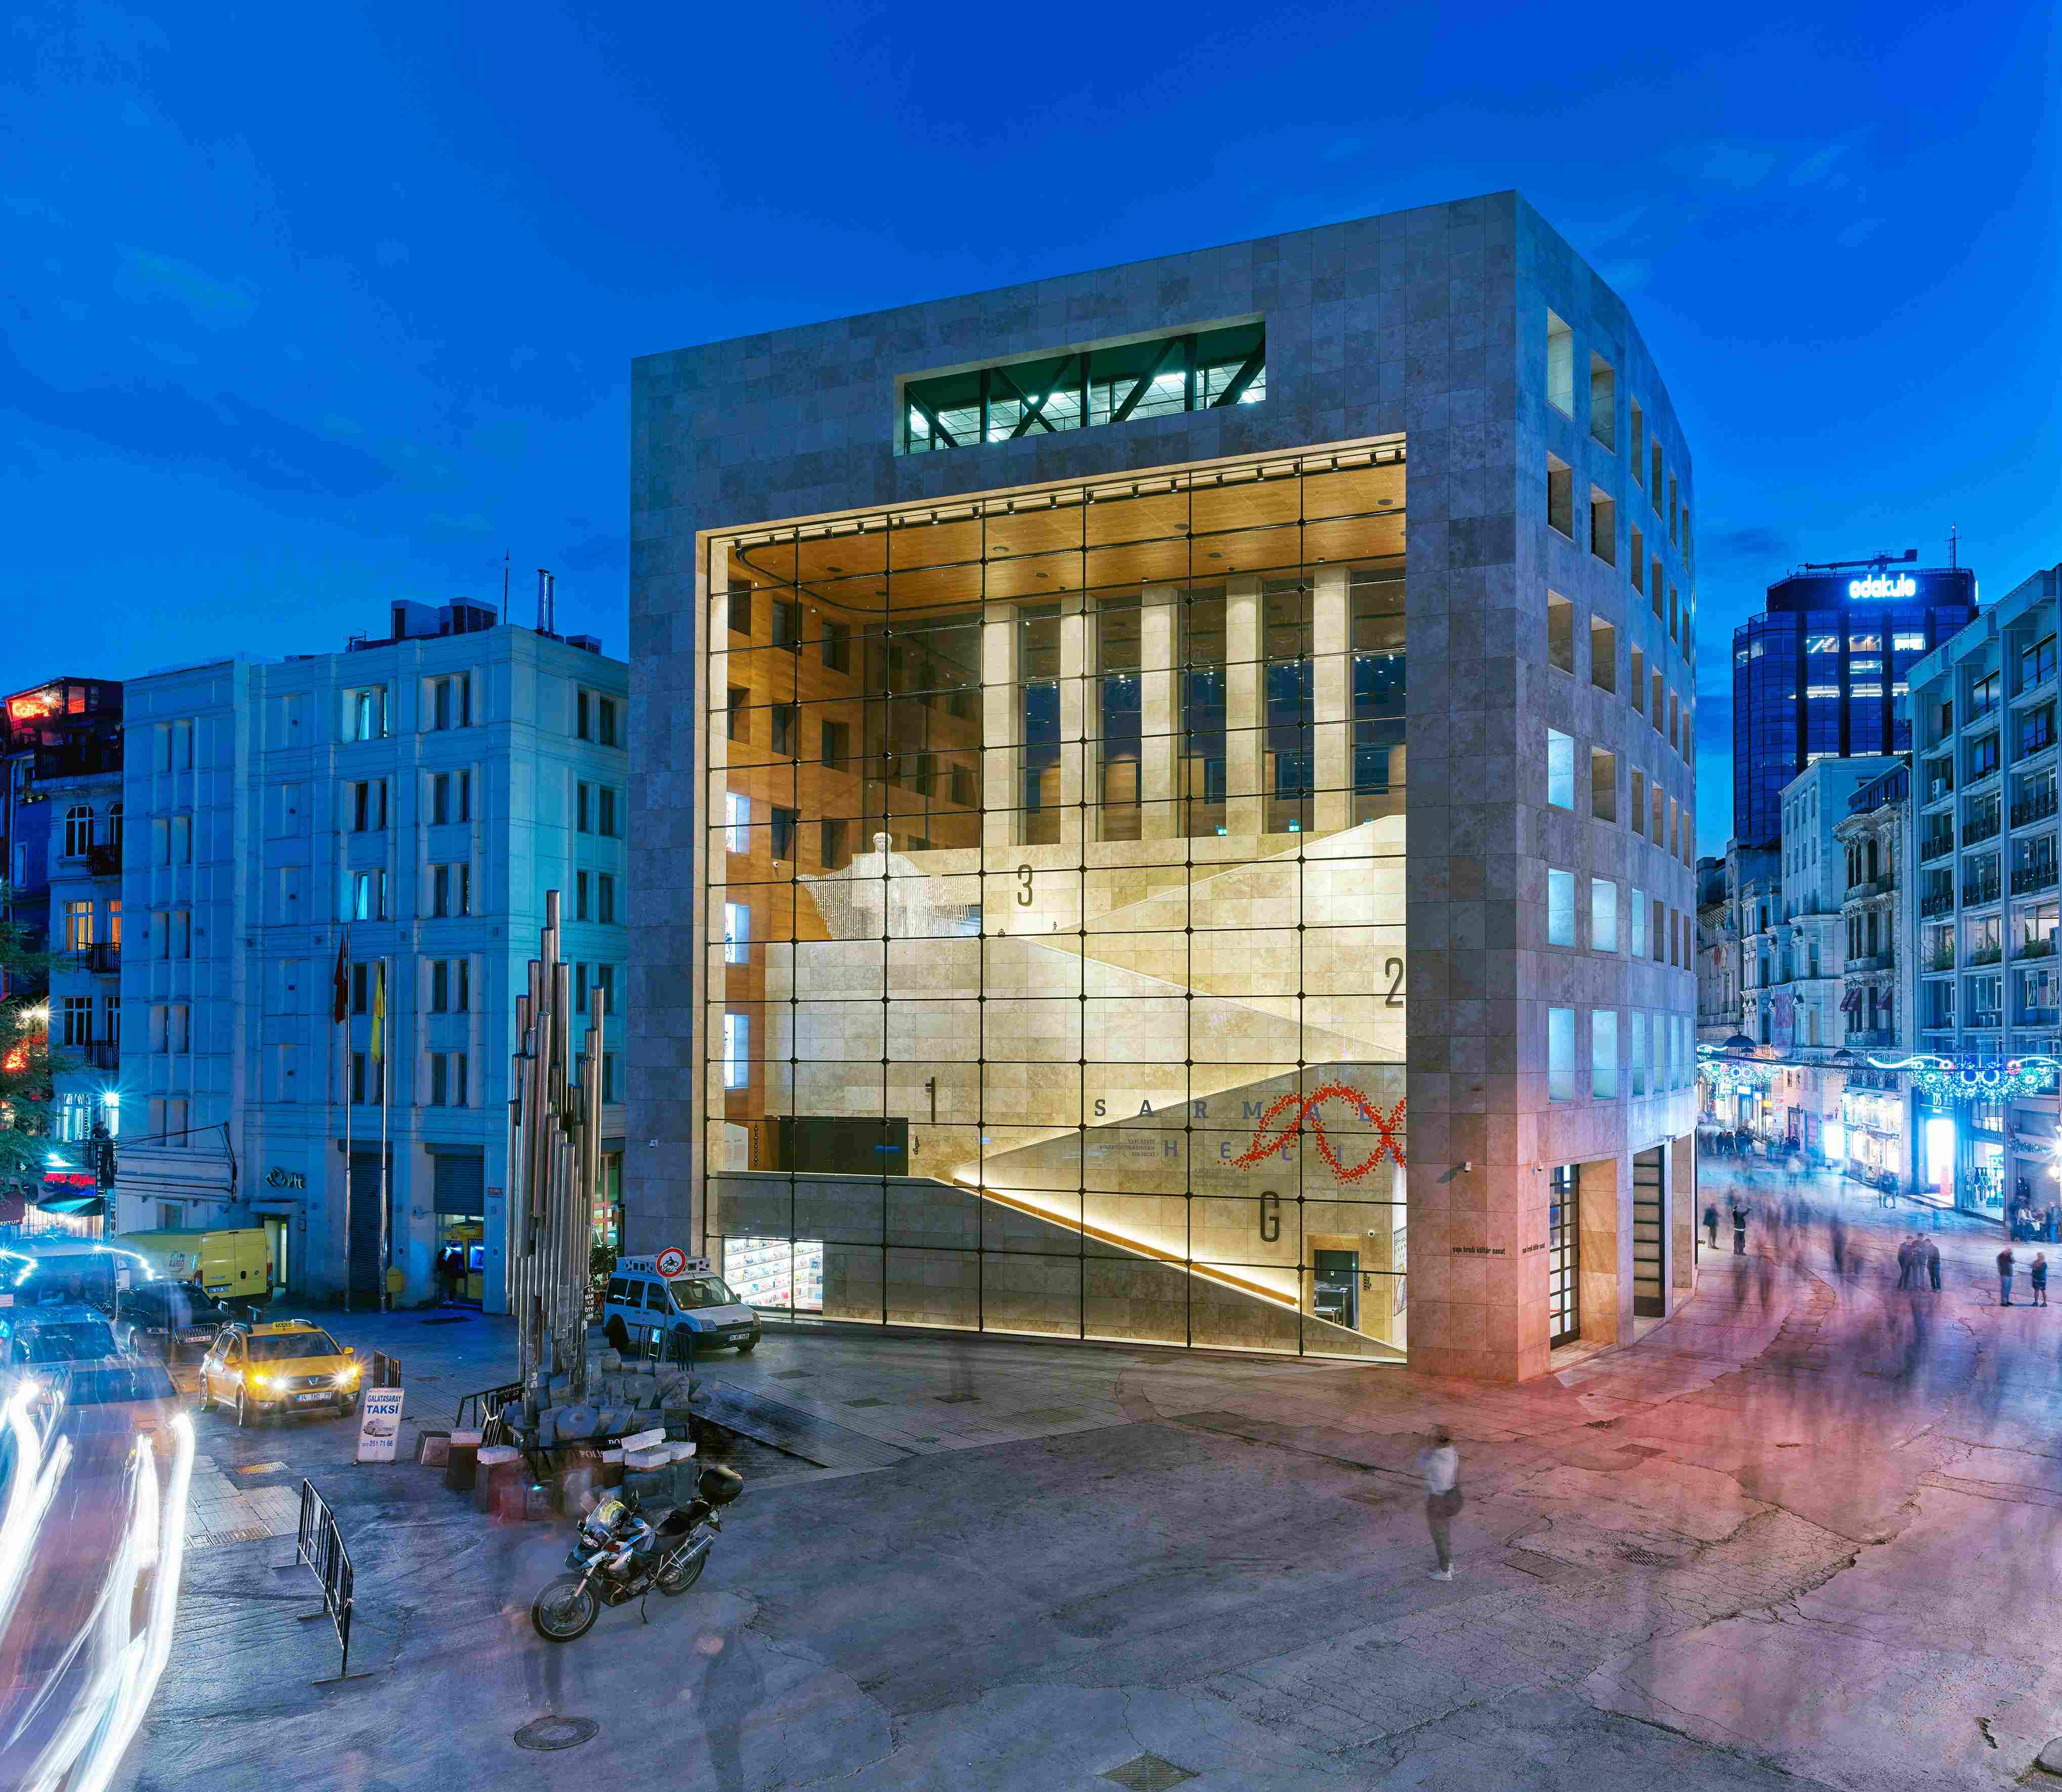 Istanbul Yapi Kredi Culture Center - Guiding Architects